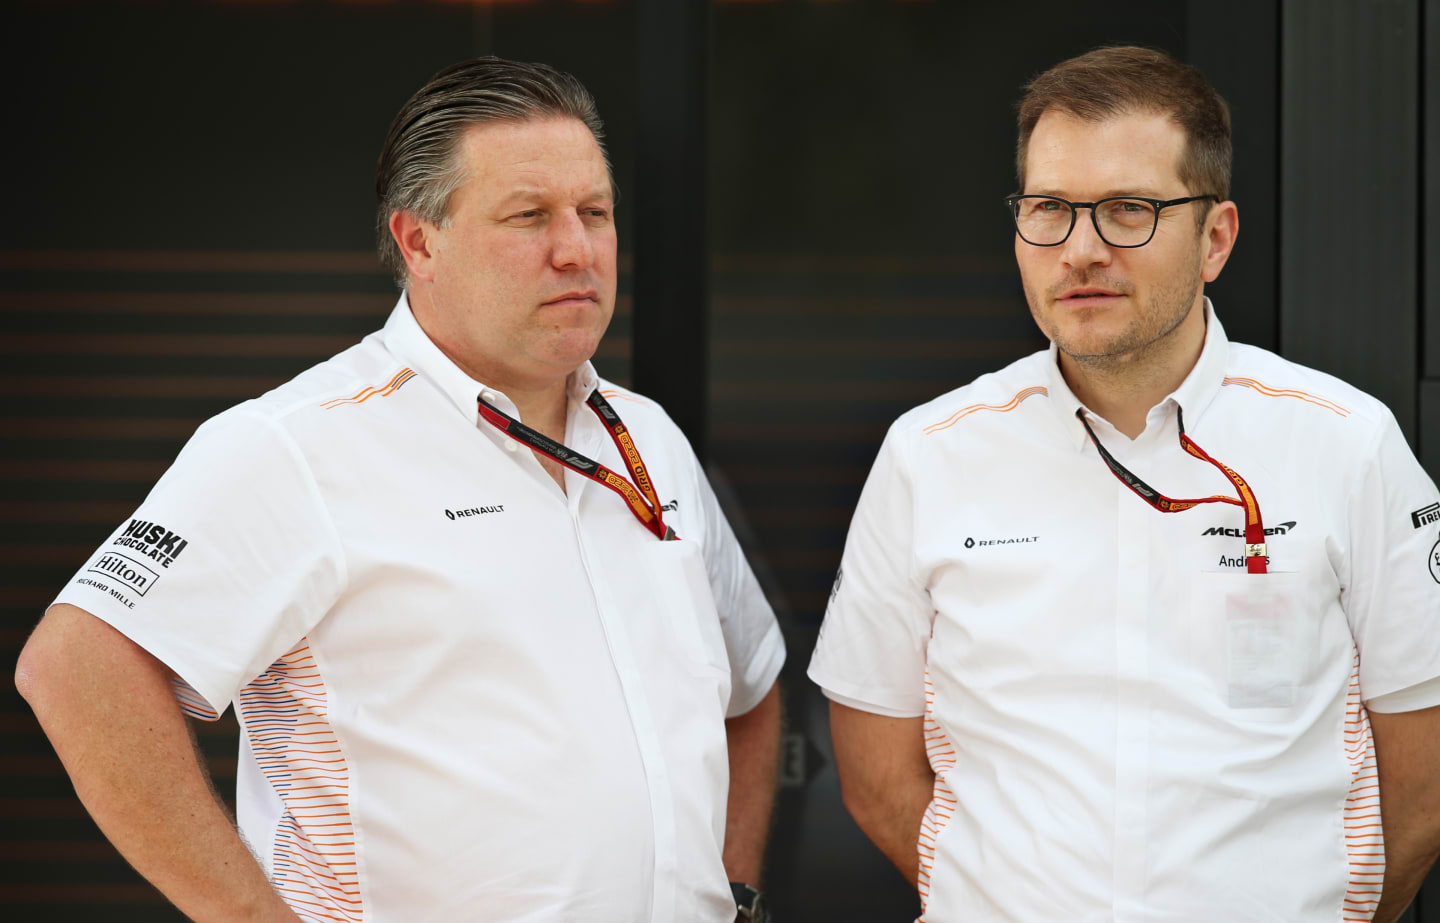 MELBOURNE, AUSTRALIA - MARCH 12: McLaren Chief Executive Officer Zak Brown and McLaren Team